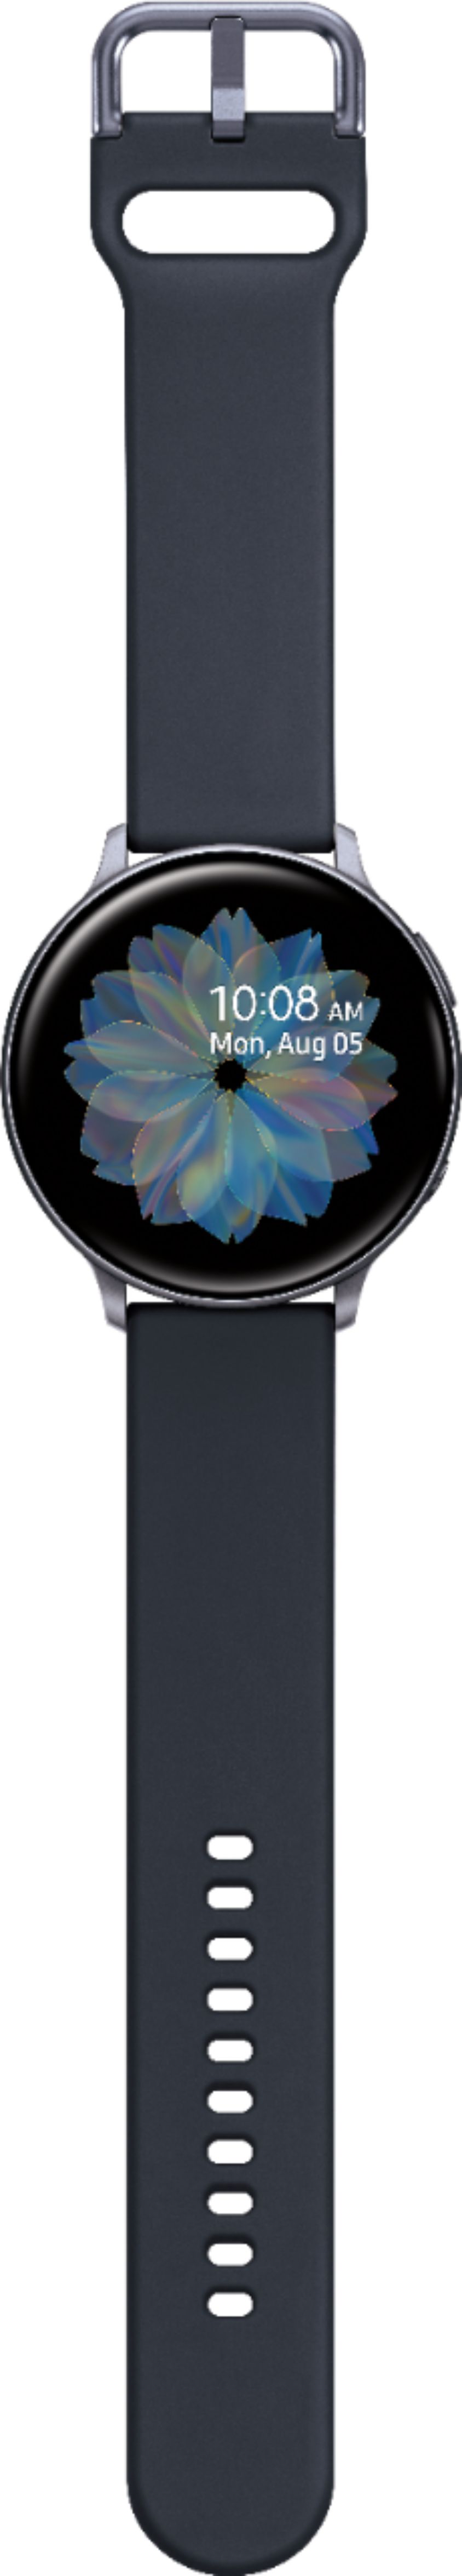 Smart Watch Samsung Galaxy Watch Active 2 44mm LTE - Aqua Black, US Version  